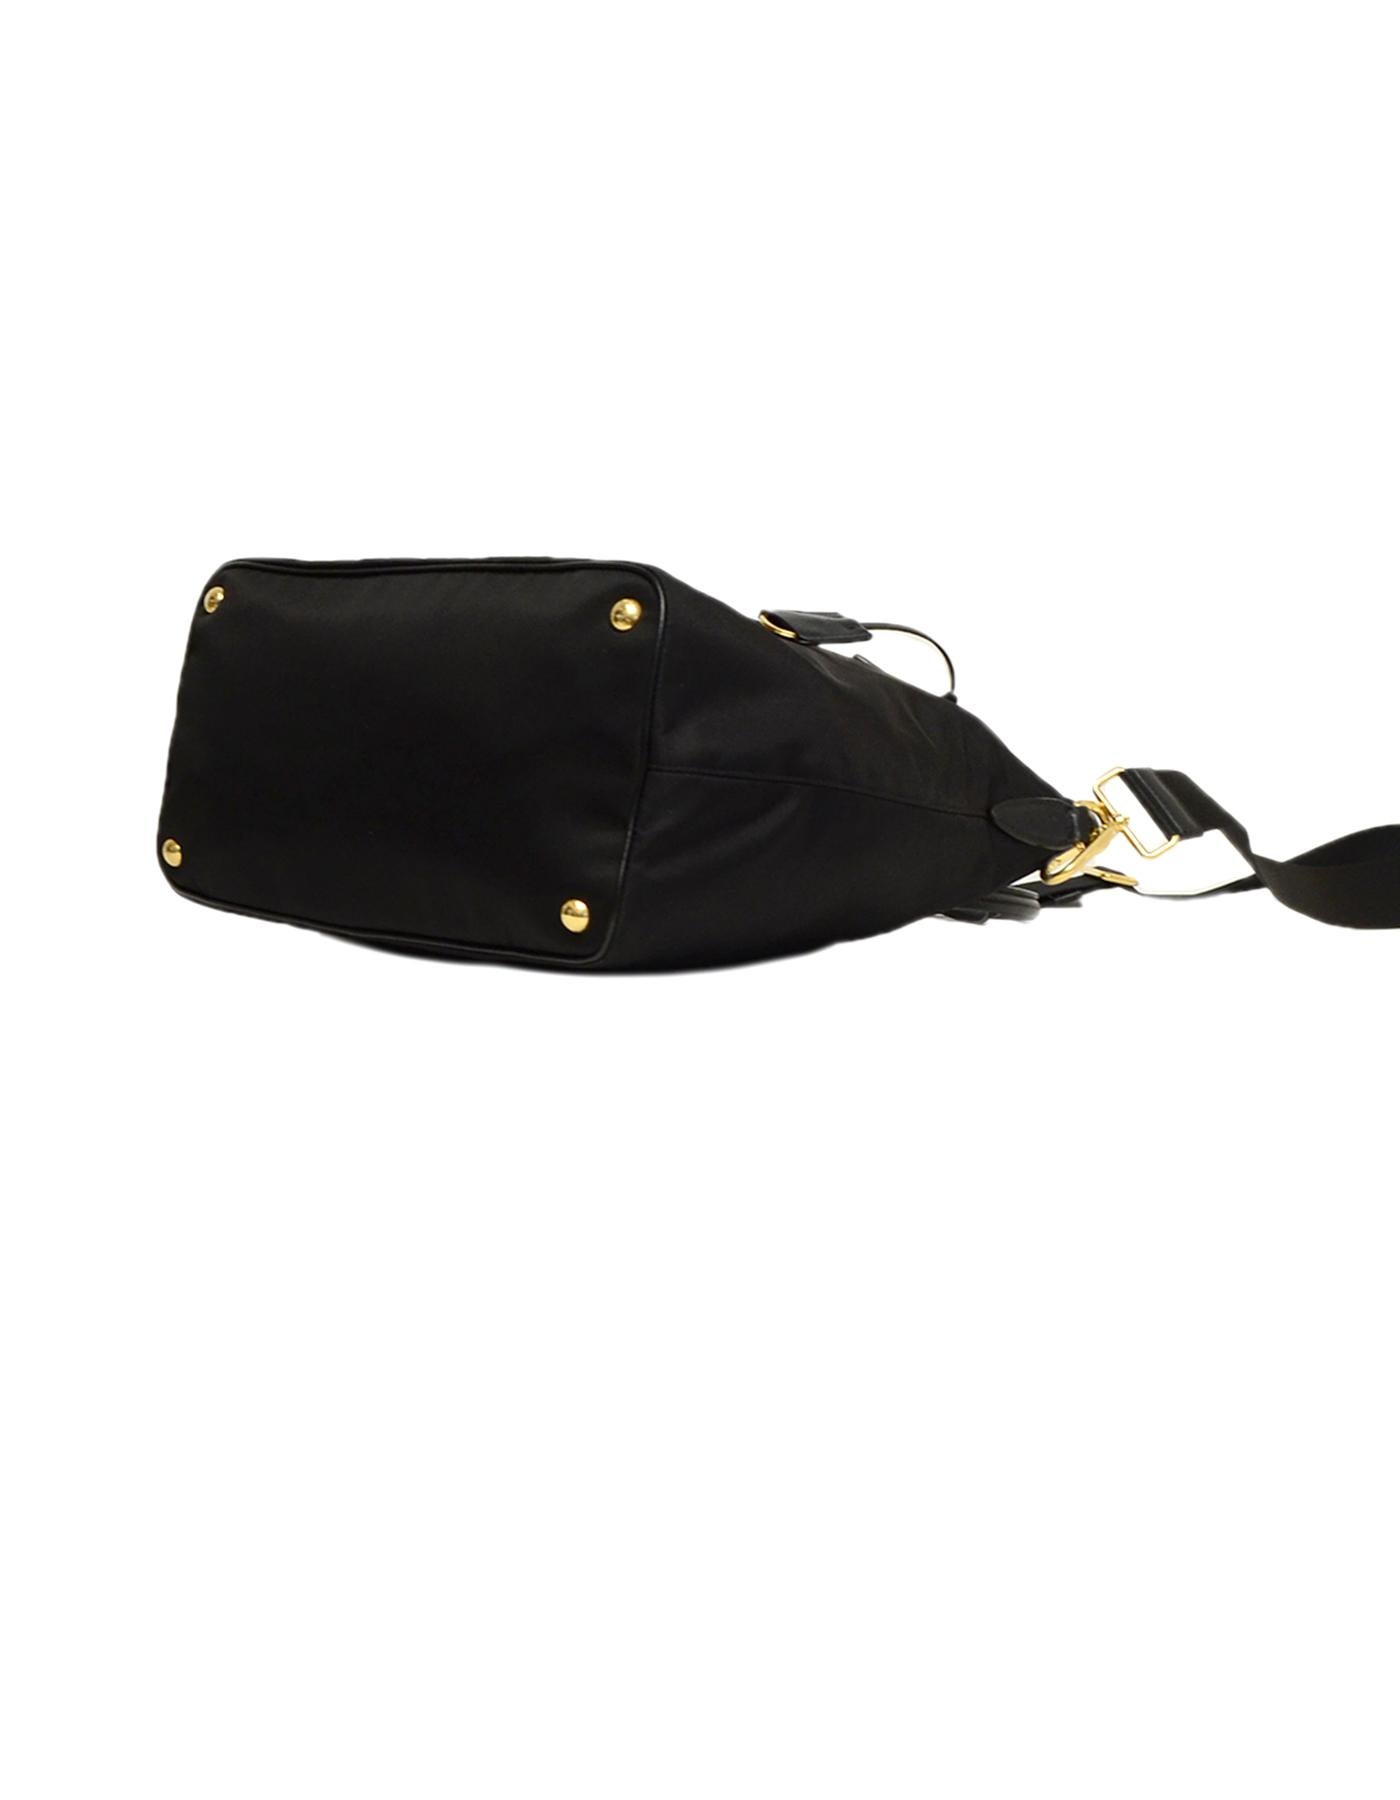 Prada Black Nylon/Leather Zip Top Tote Bag 1